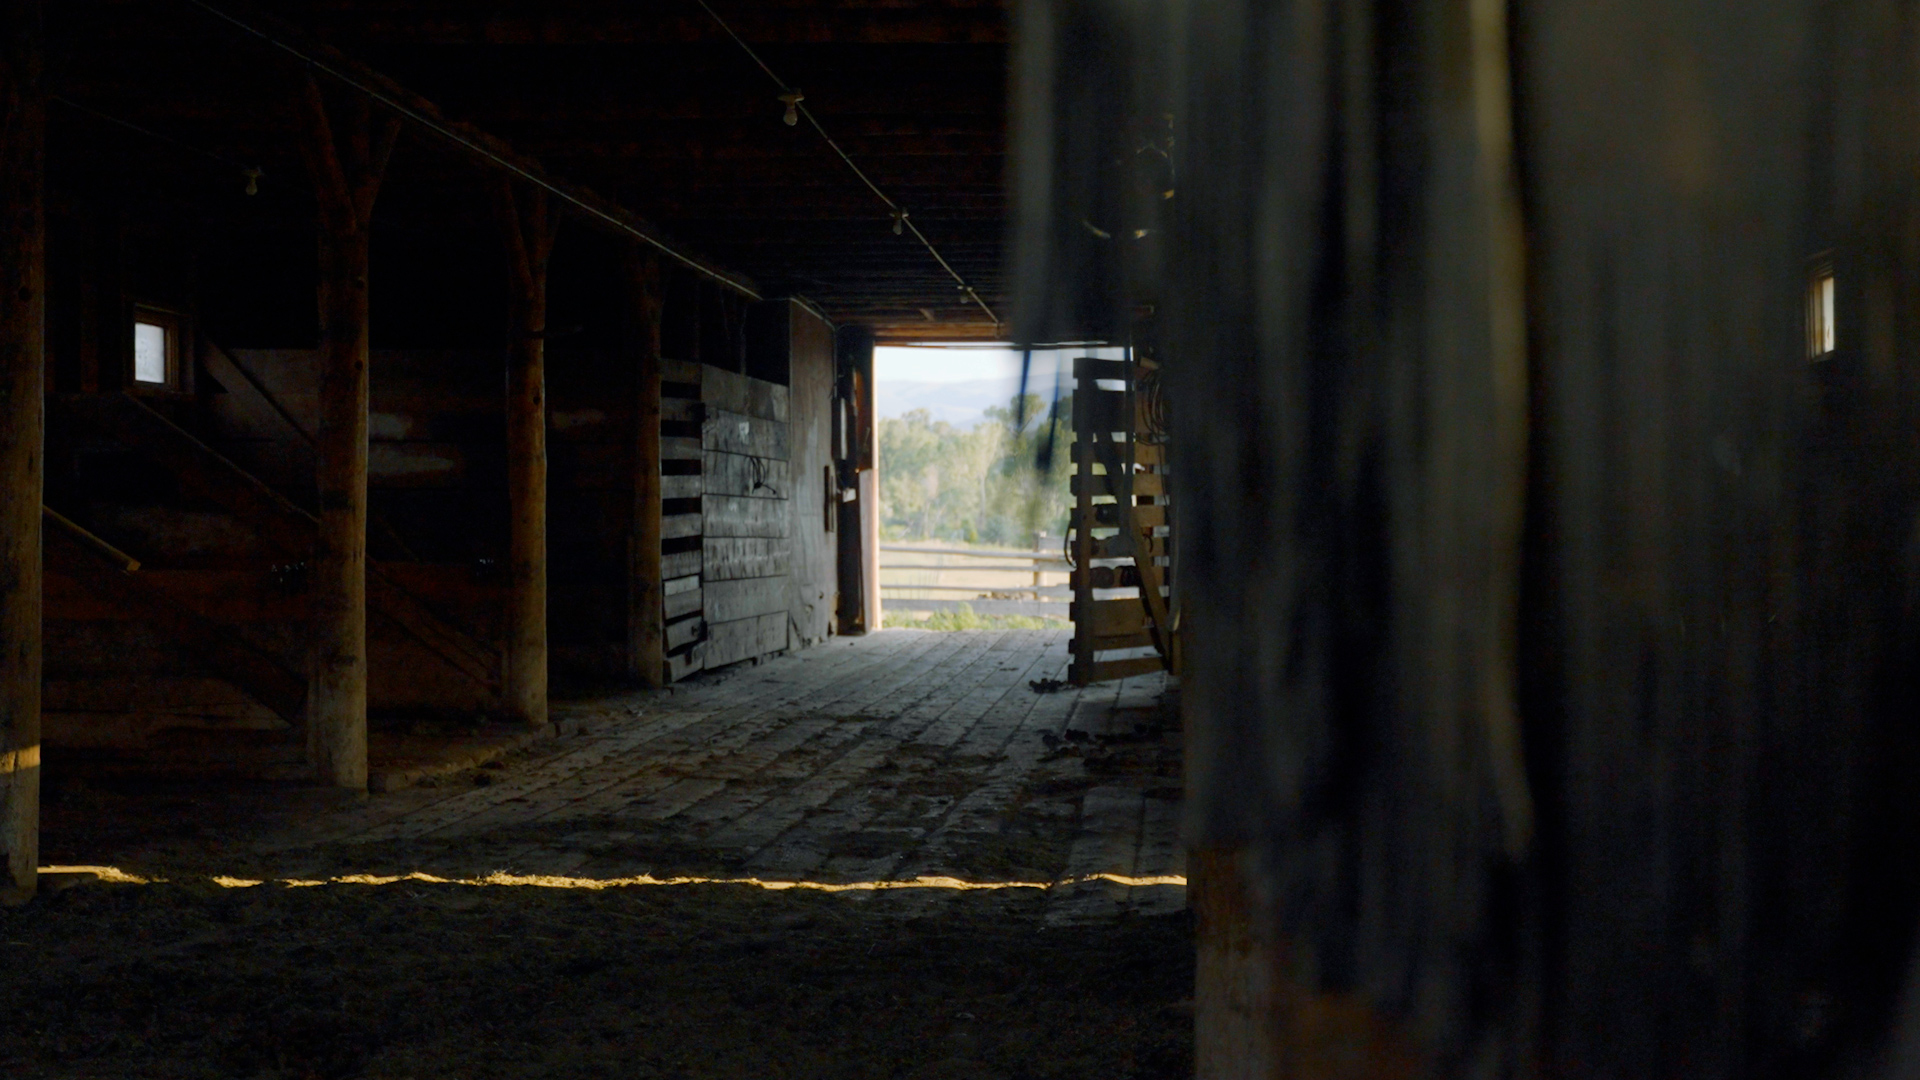 Inside of a wooden barn